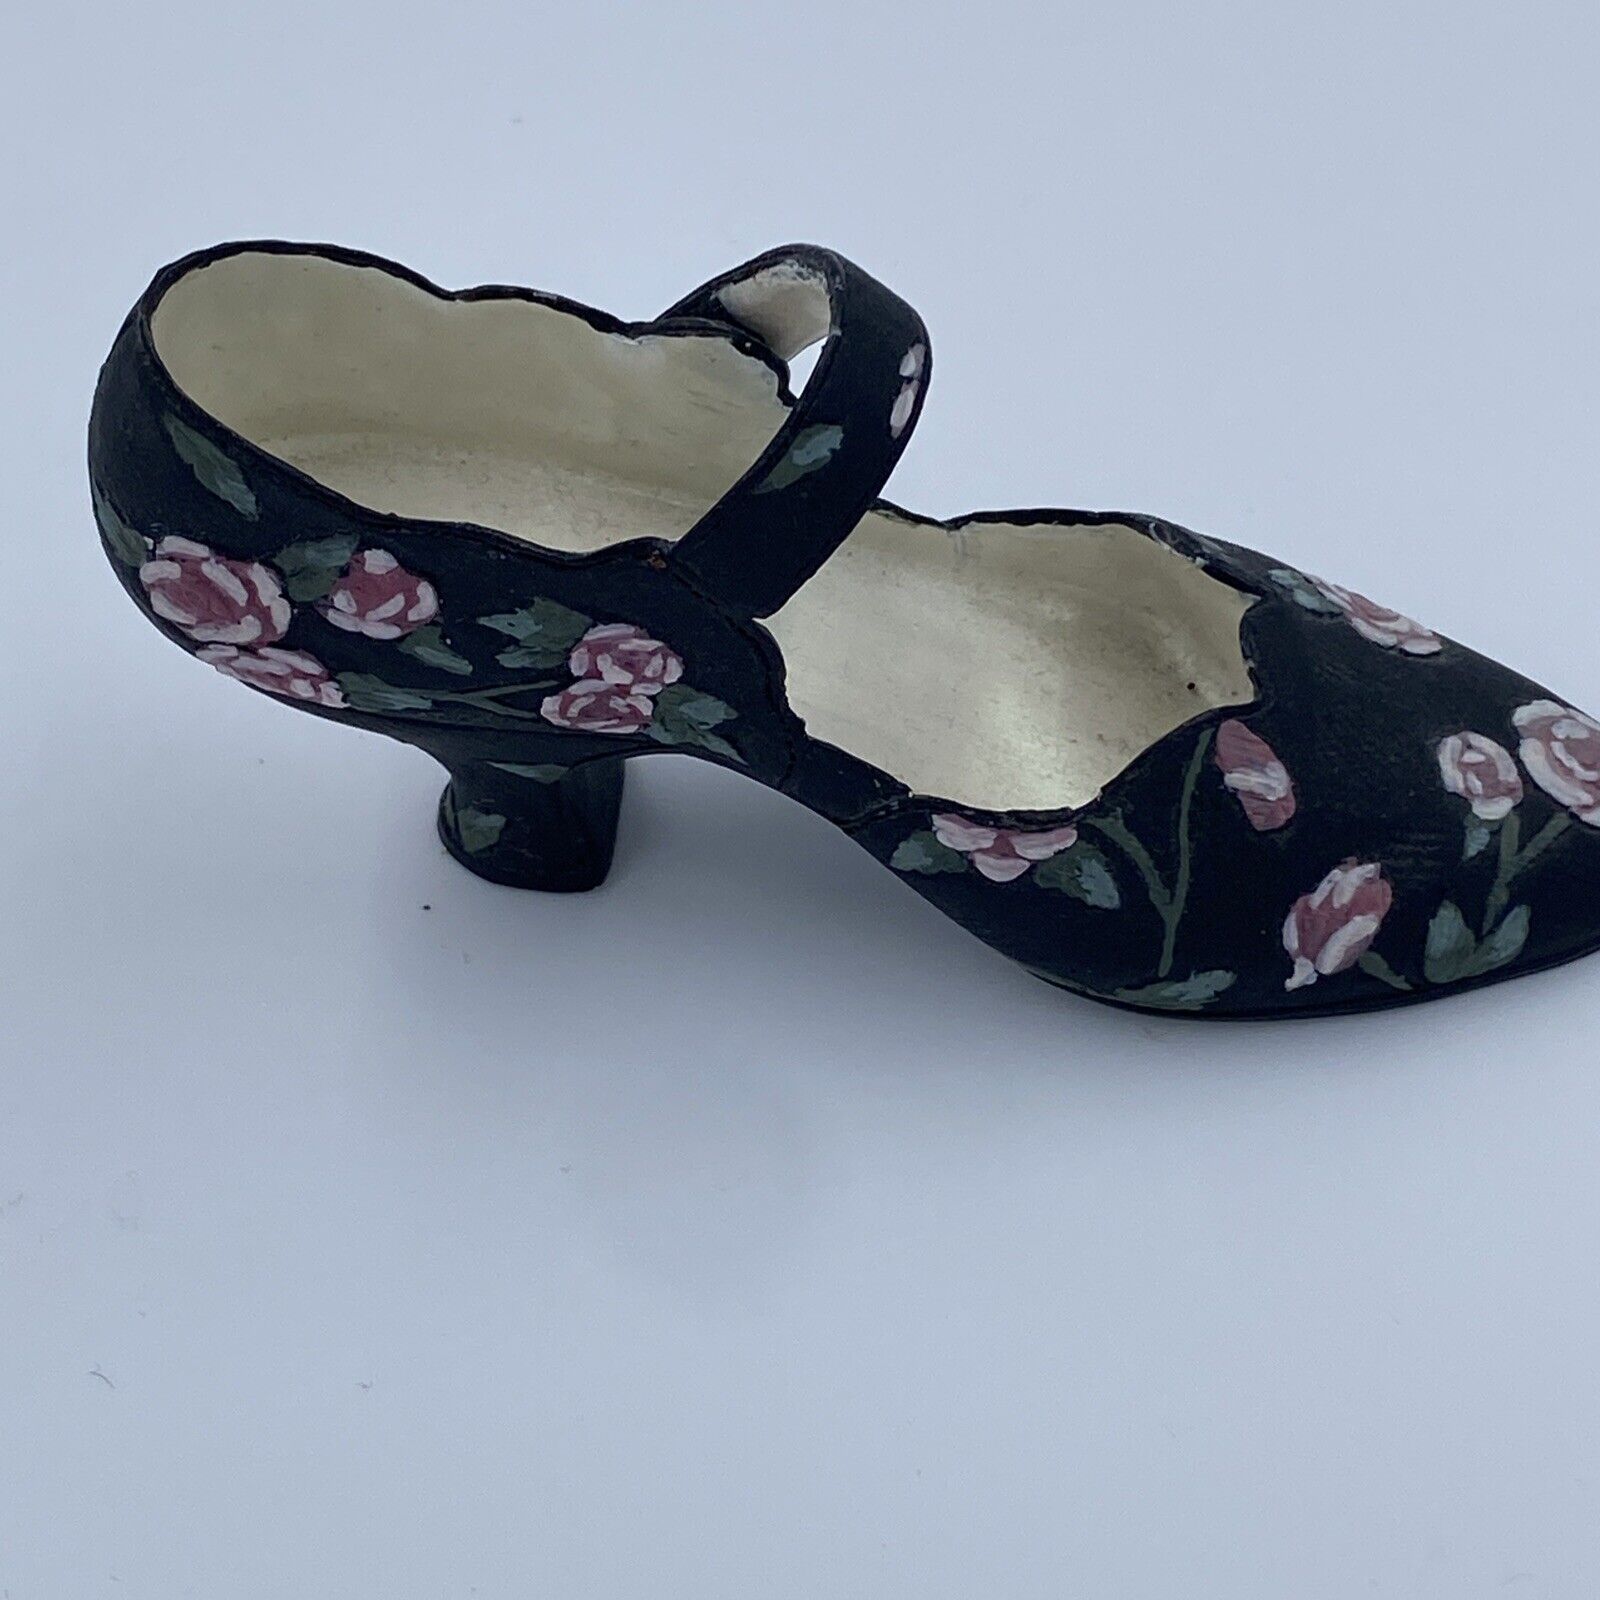 Nostalgia Miniature Shoe Collectible Figurine Black And Floral